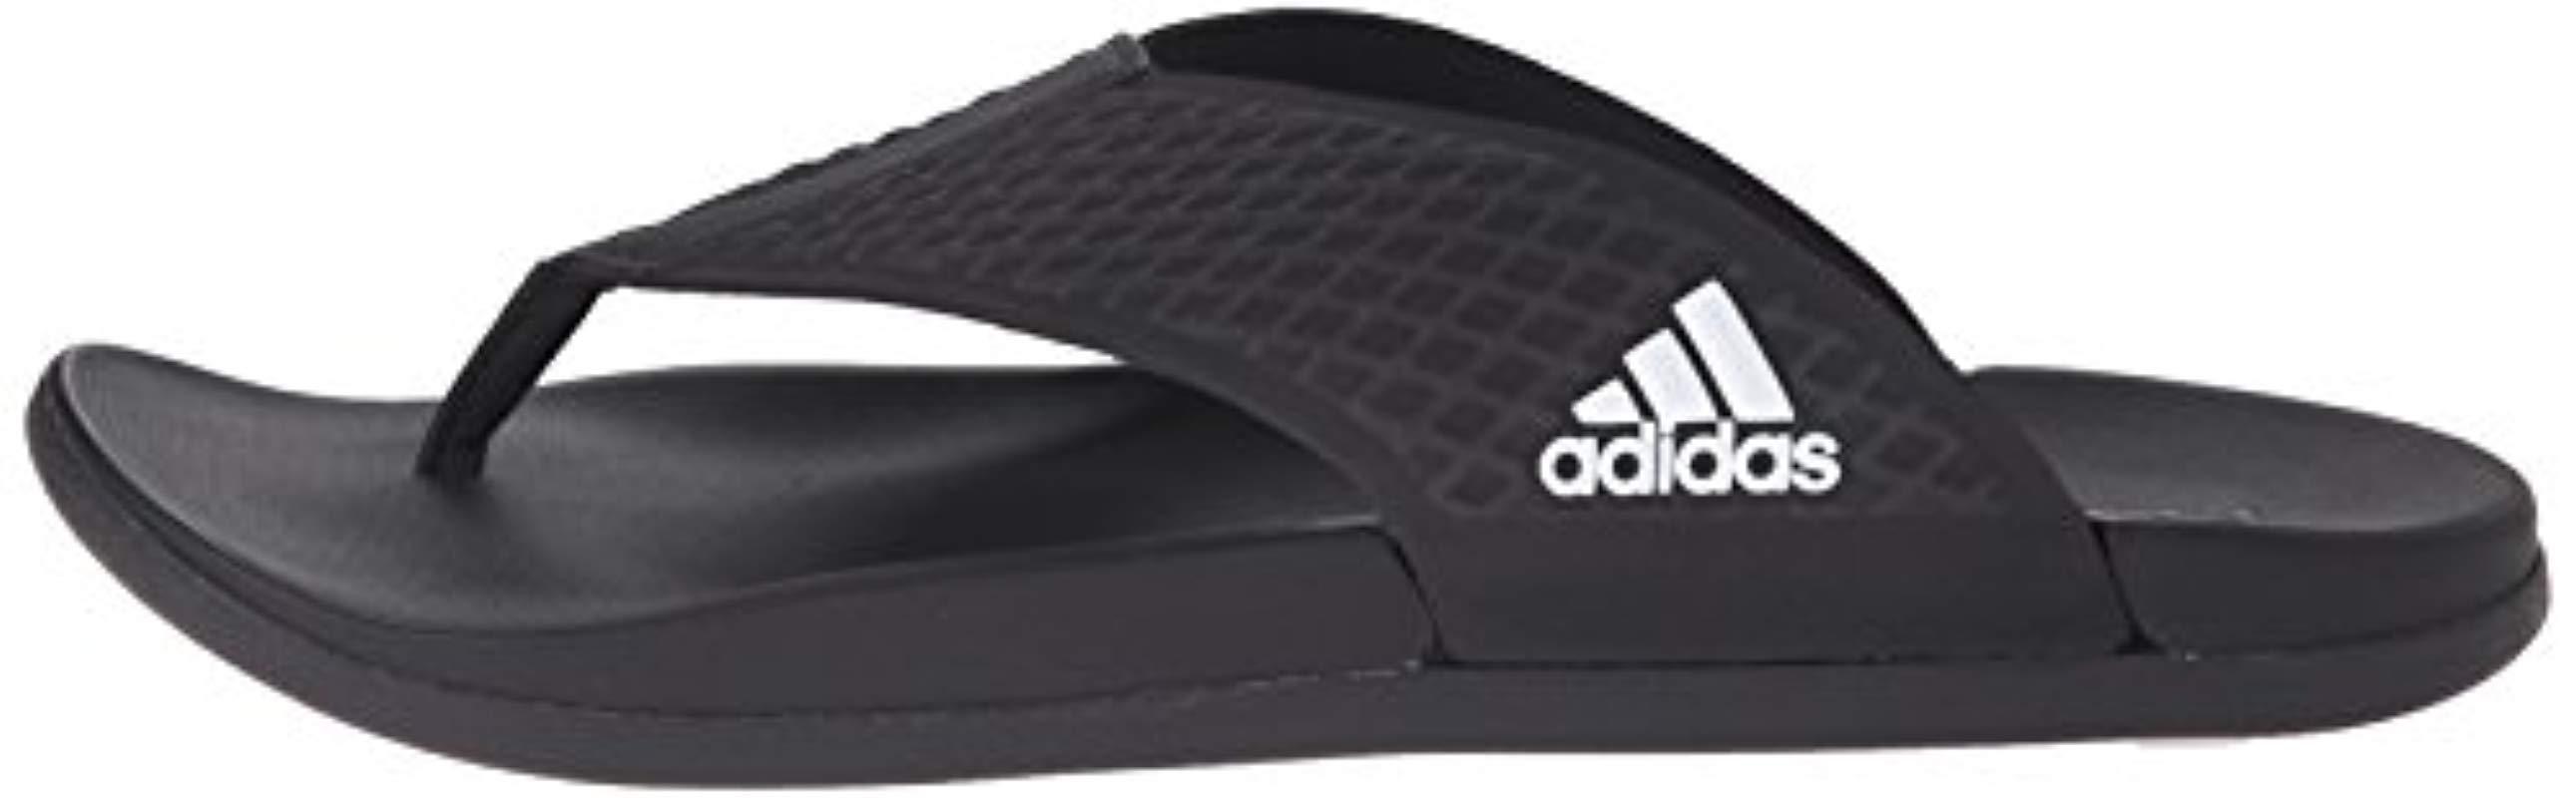 adidas Adilette Cf Ultra Y Athletic Sandal in Black/White/Black (Black) for  Men | Lyst